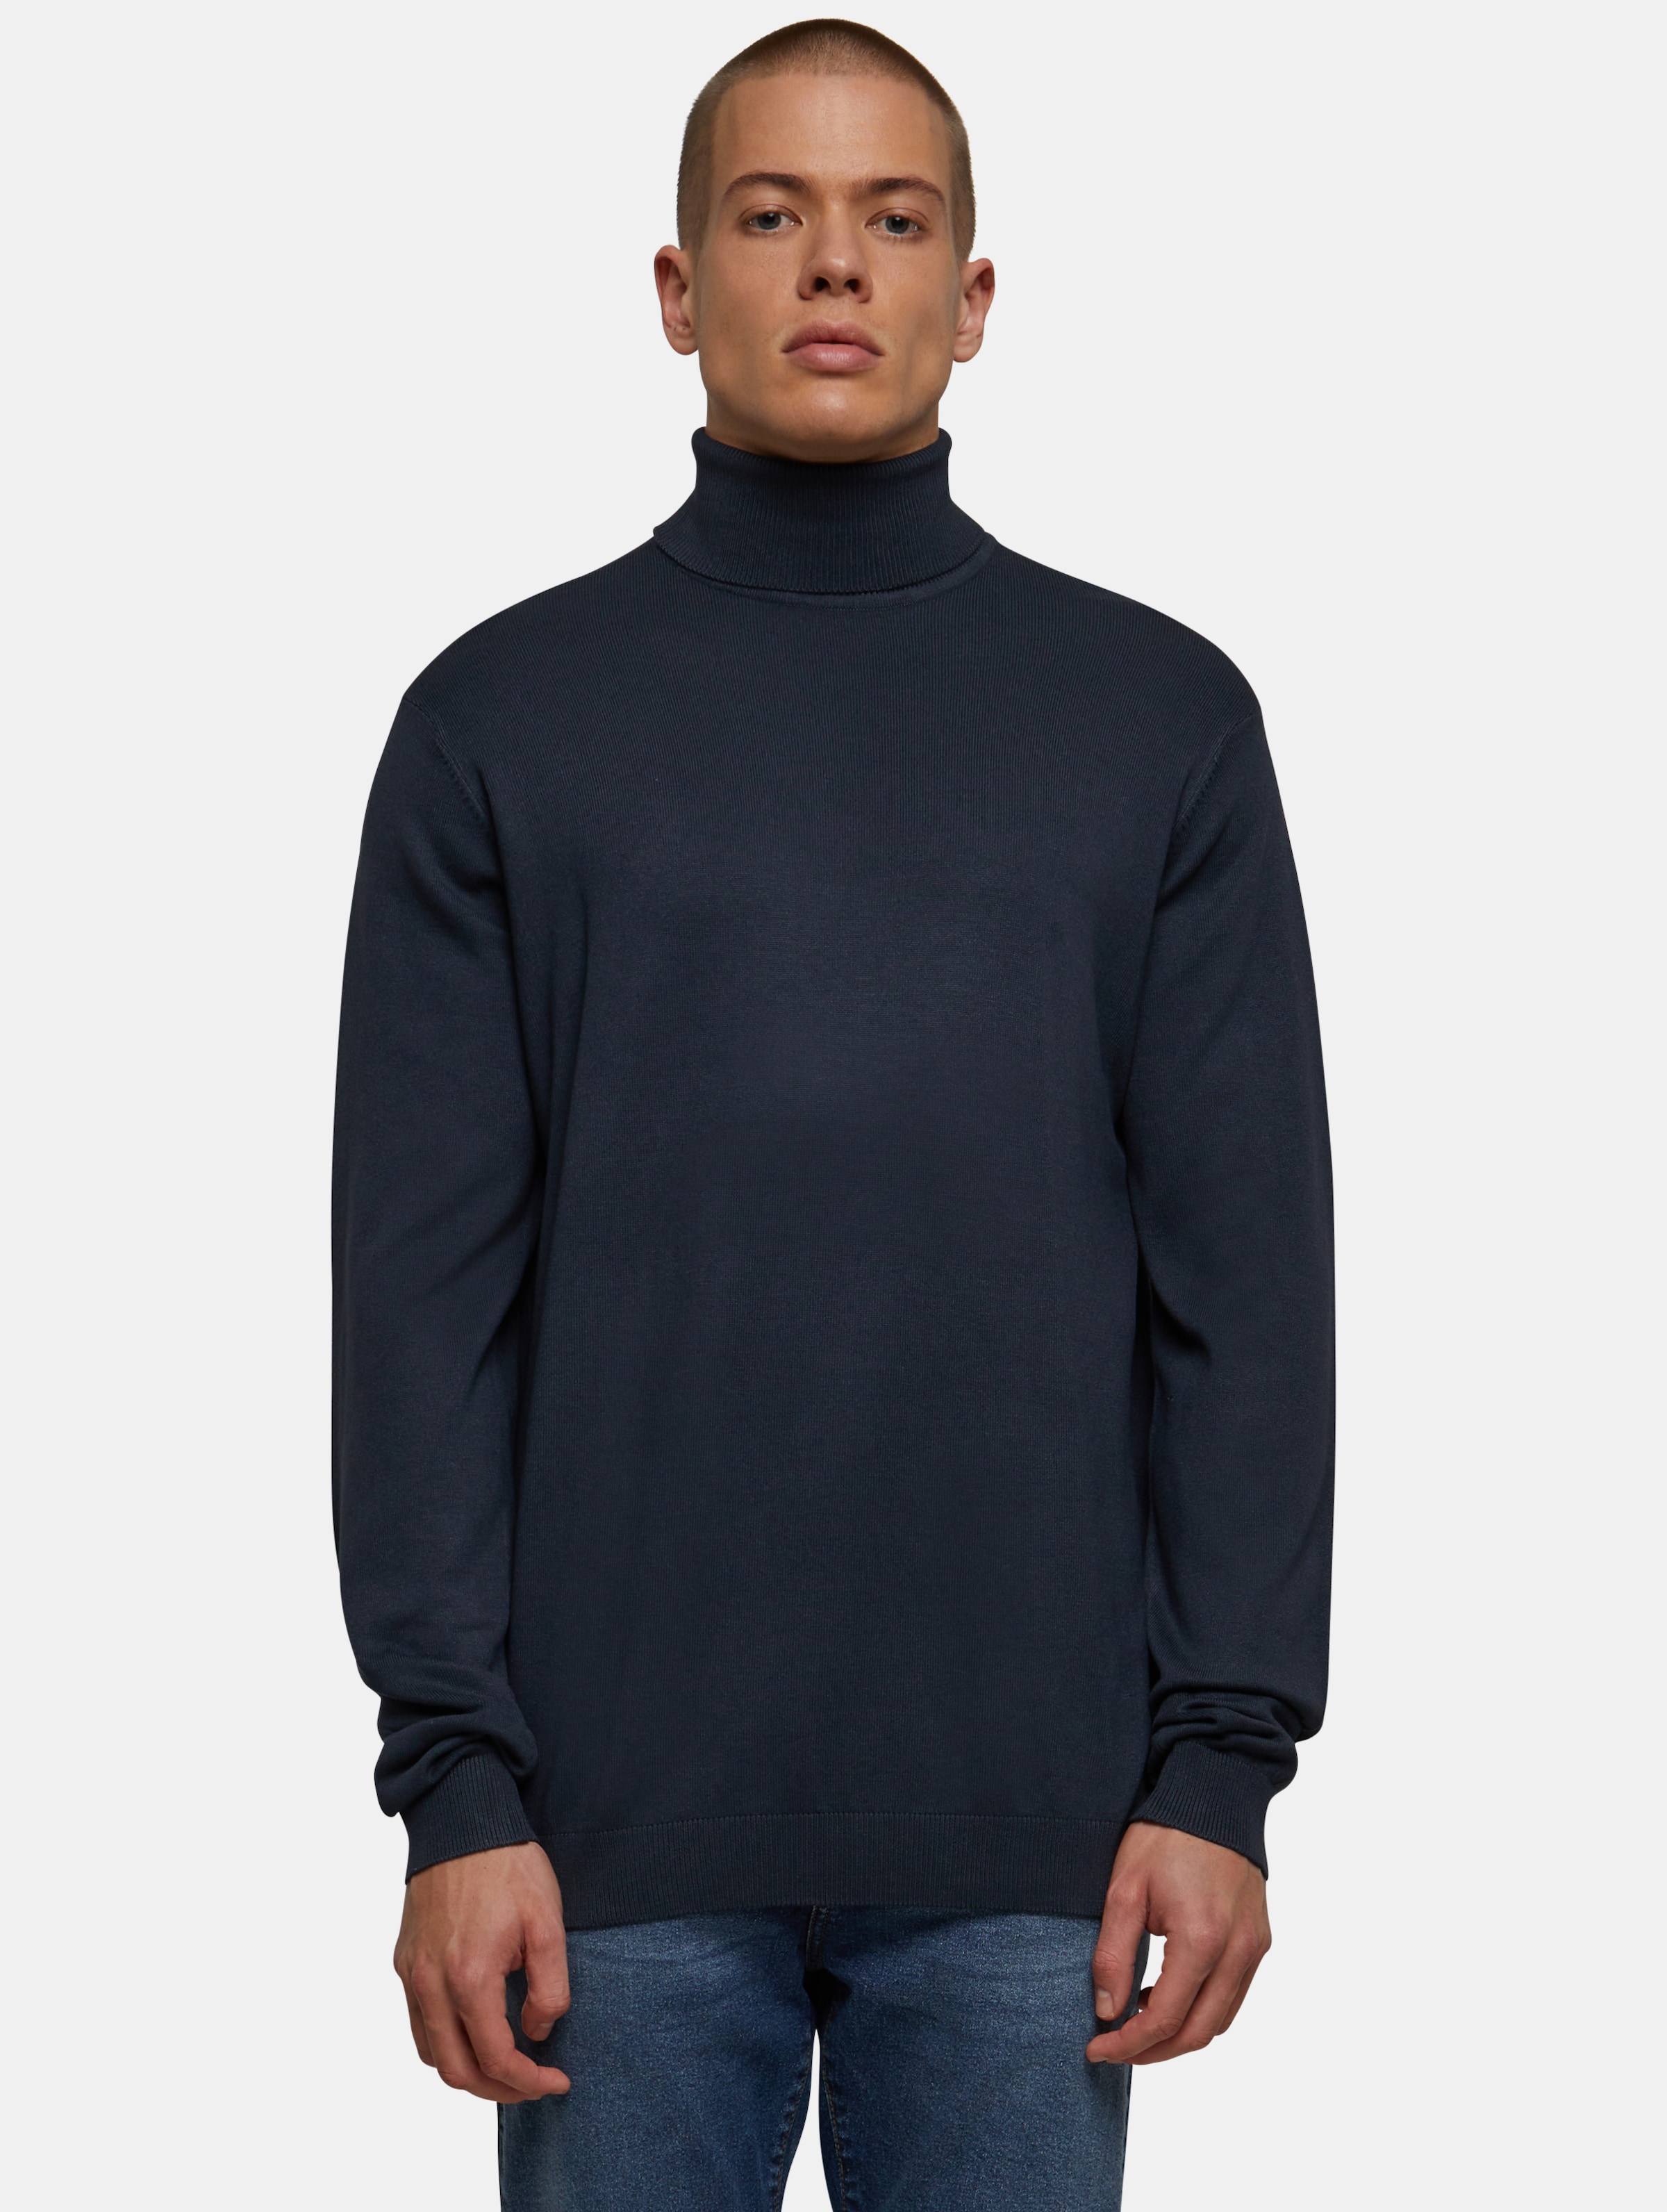 Urban Classics - Knitted Turtleneck Sweater - 4XL - Donkerblauw